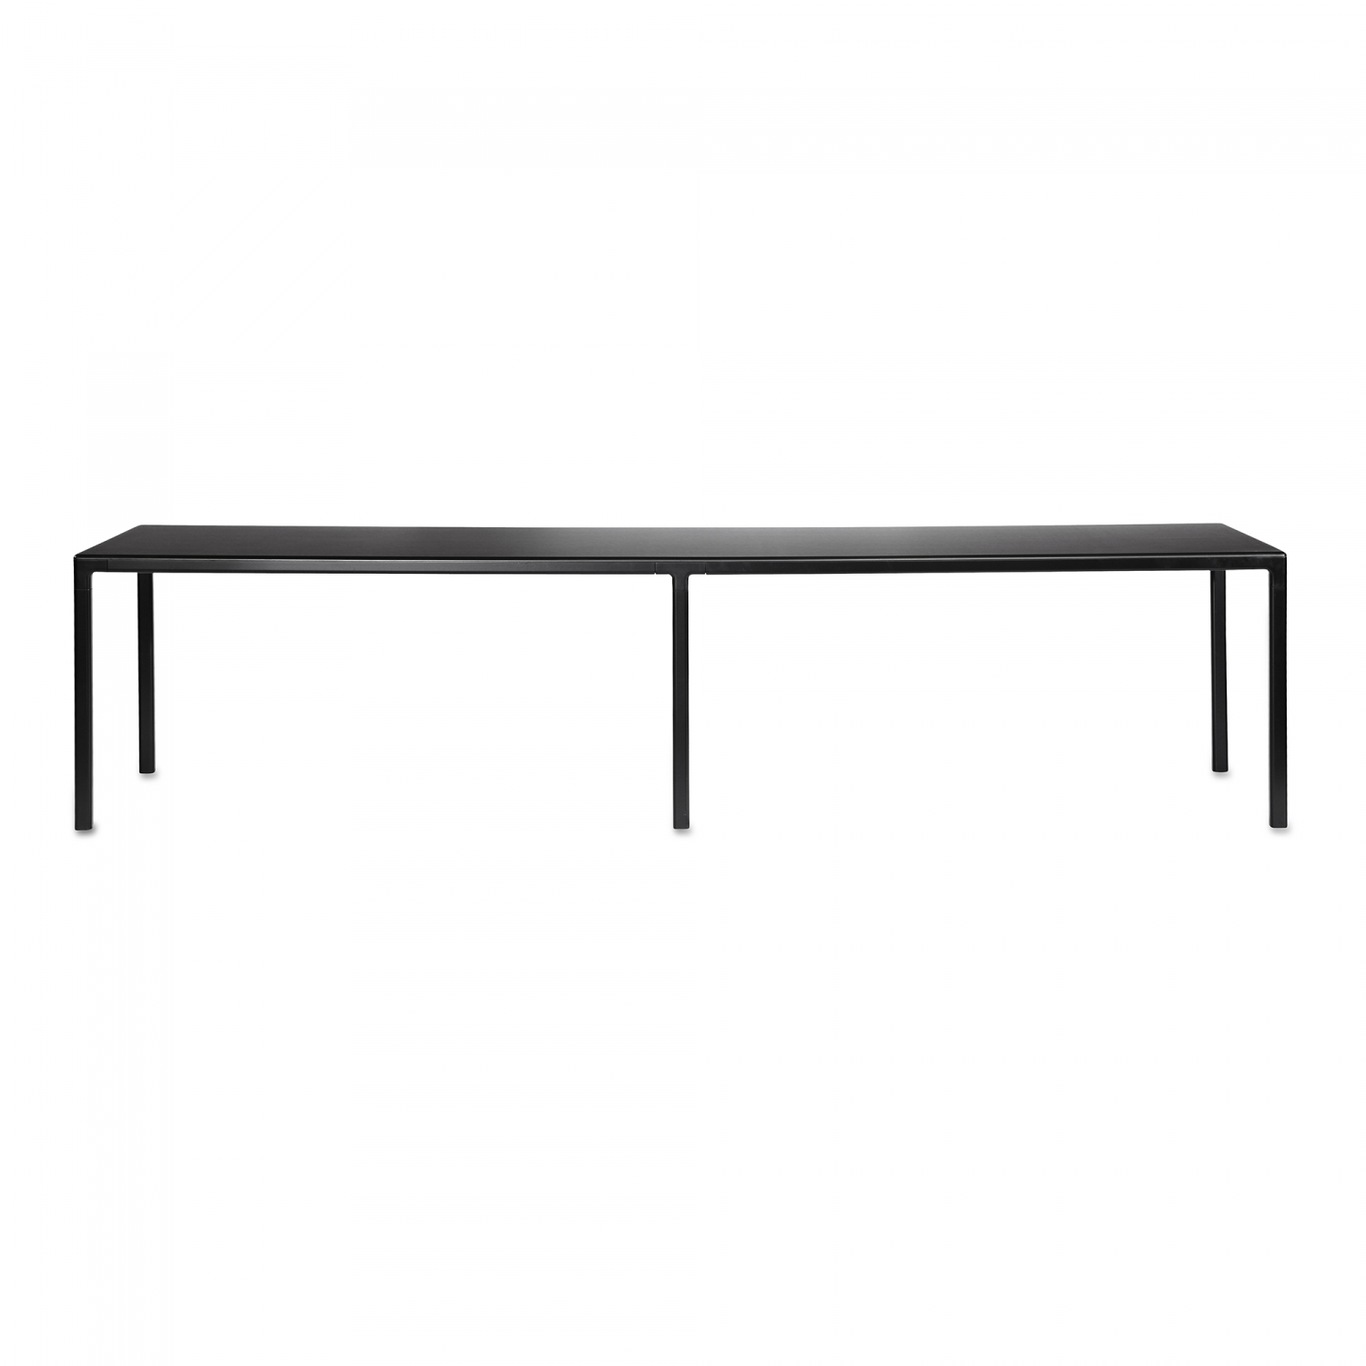 T12 Table 120x320 cm, Black